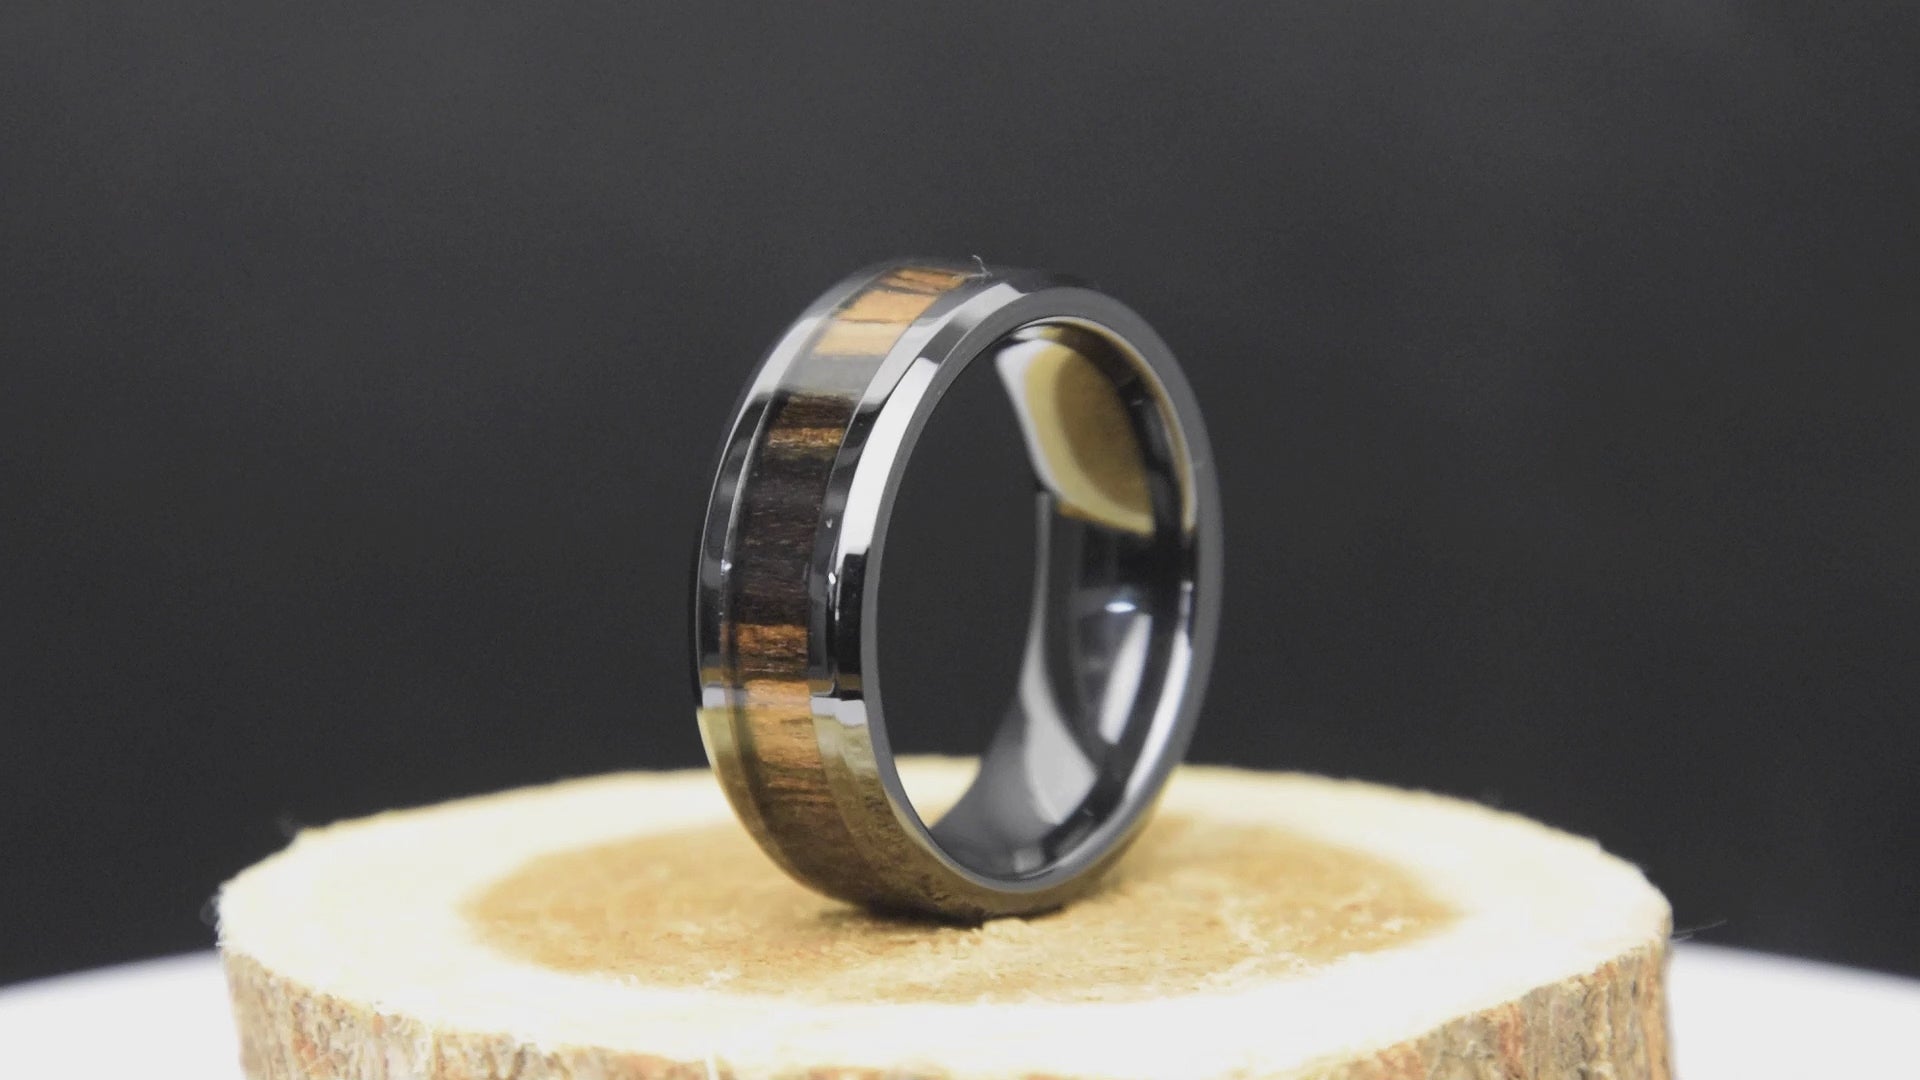 Ebony Wood Ring With Black Ceramic Band - Men's Wedding Band Video - Copperbeard Jewelry